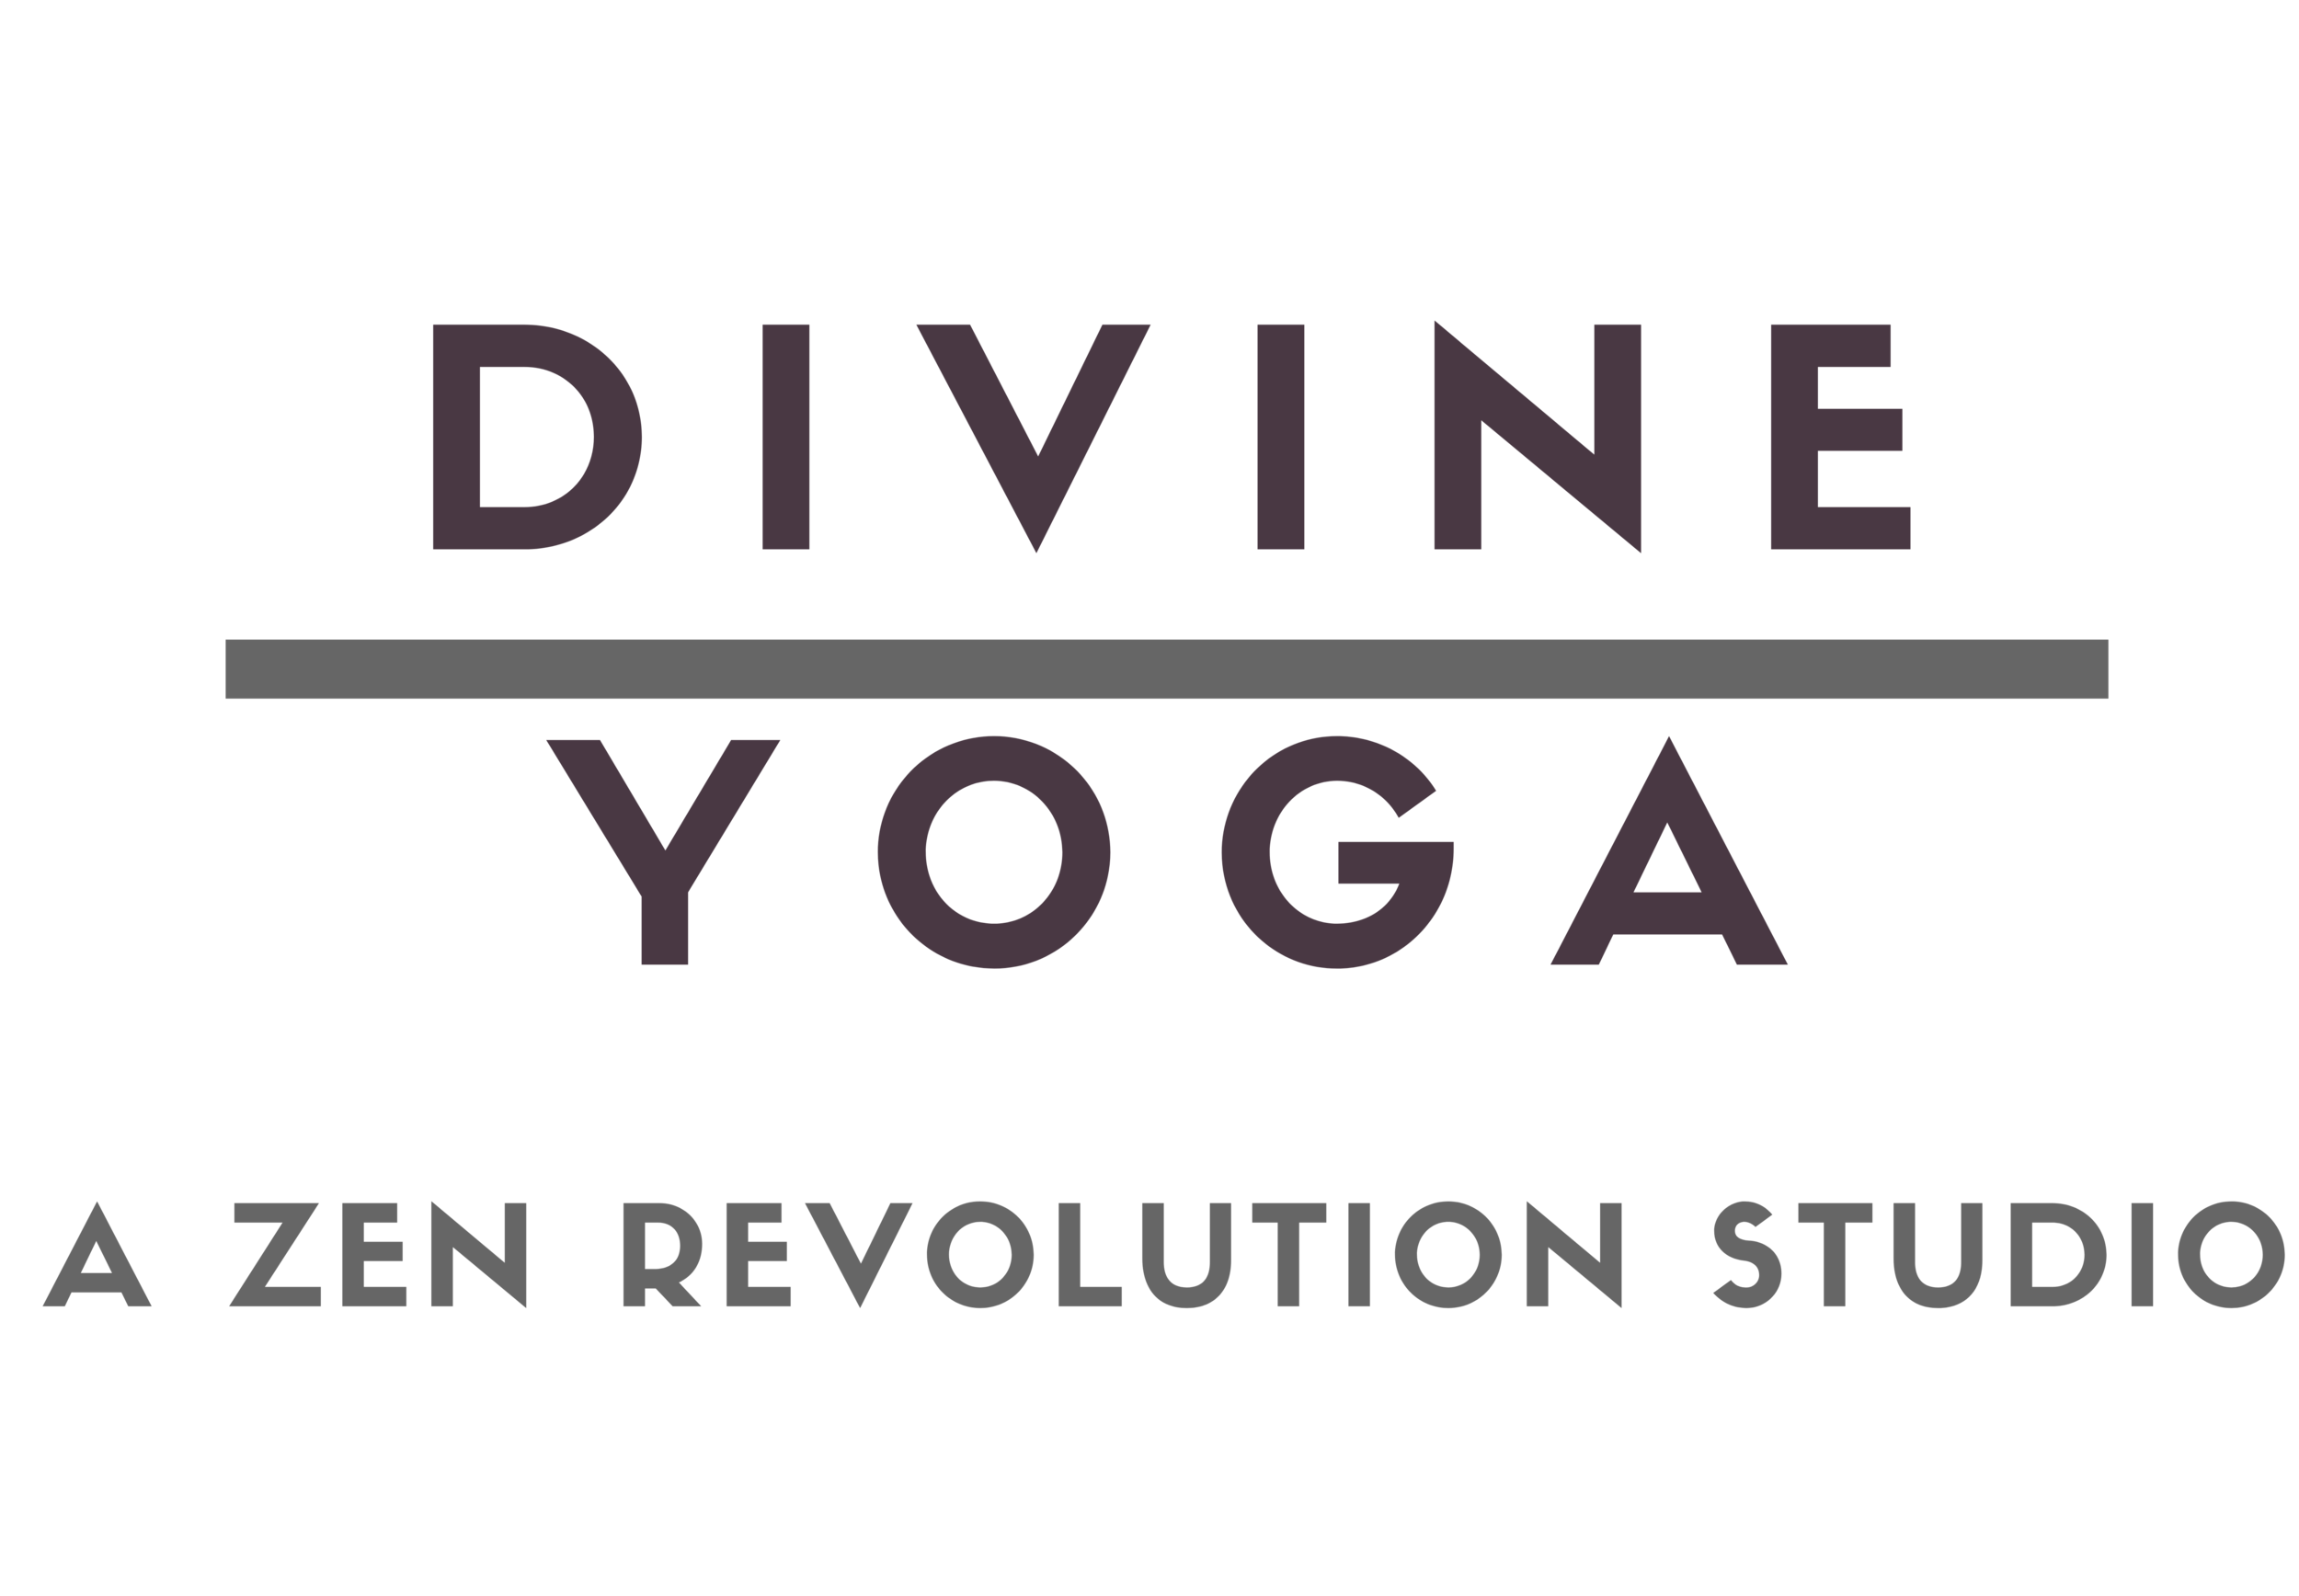 Divine Yoga Company